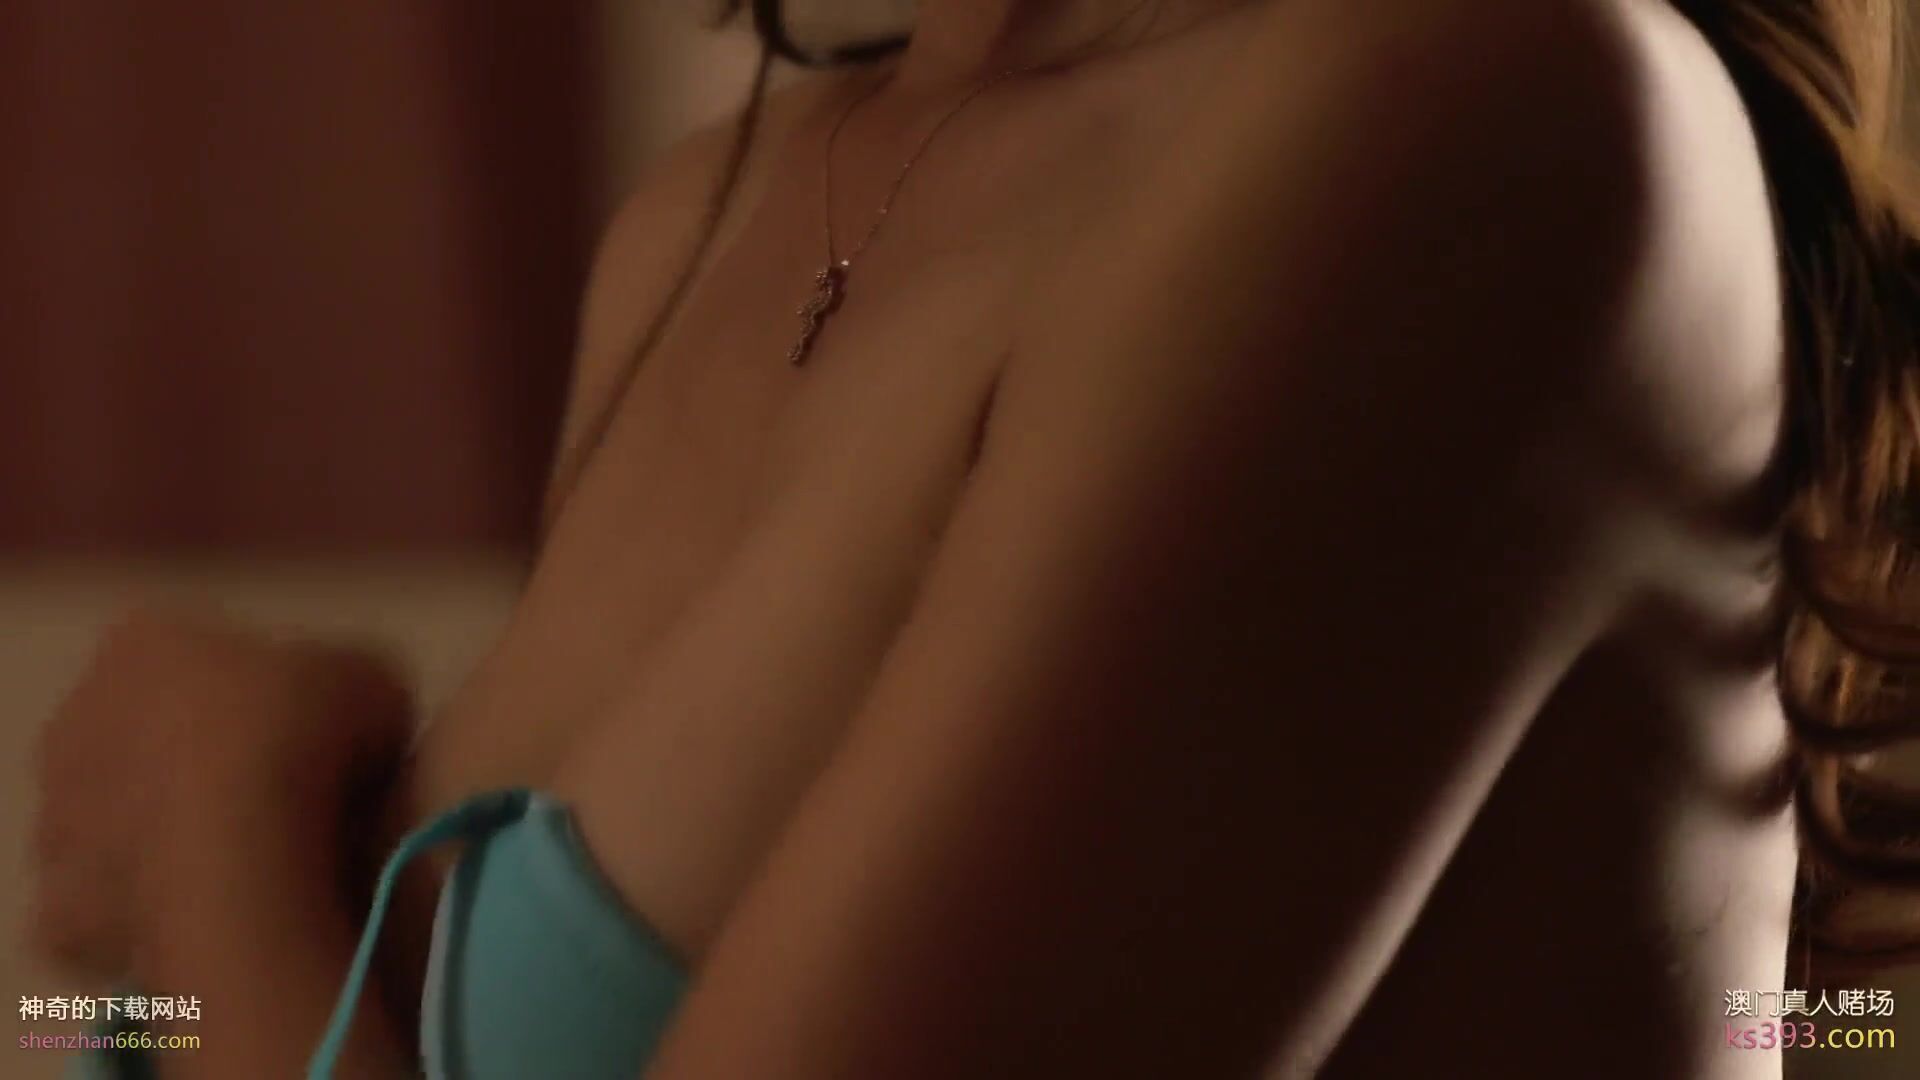 FreeAnimeForLife 김화연 공즉시색 Asian Kim Hwa Yeon in nude scene from Korean film Mutual Relations (2015) Bikini - 2